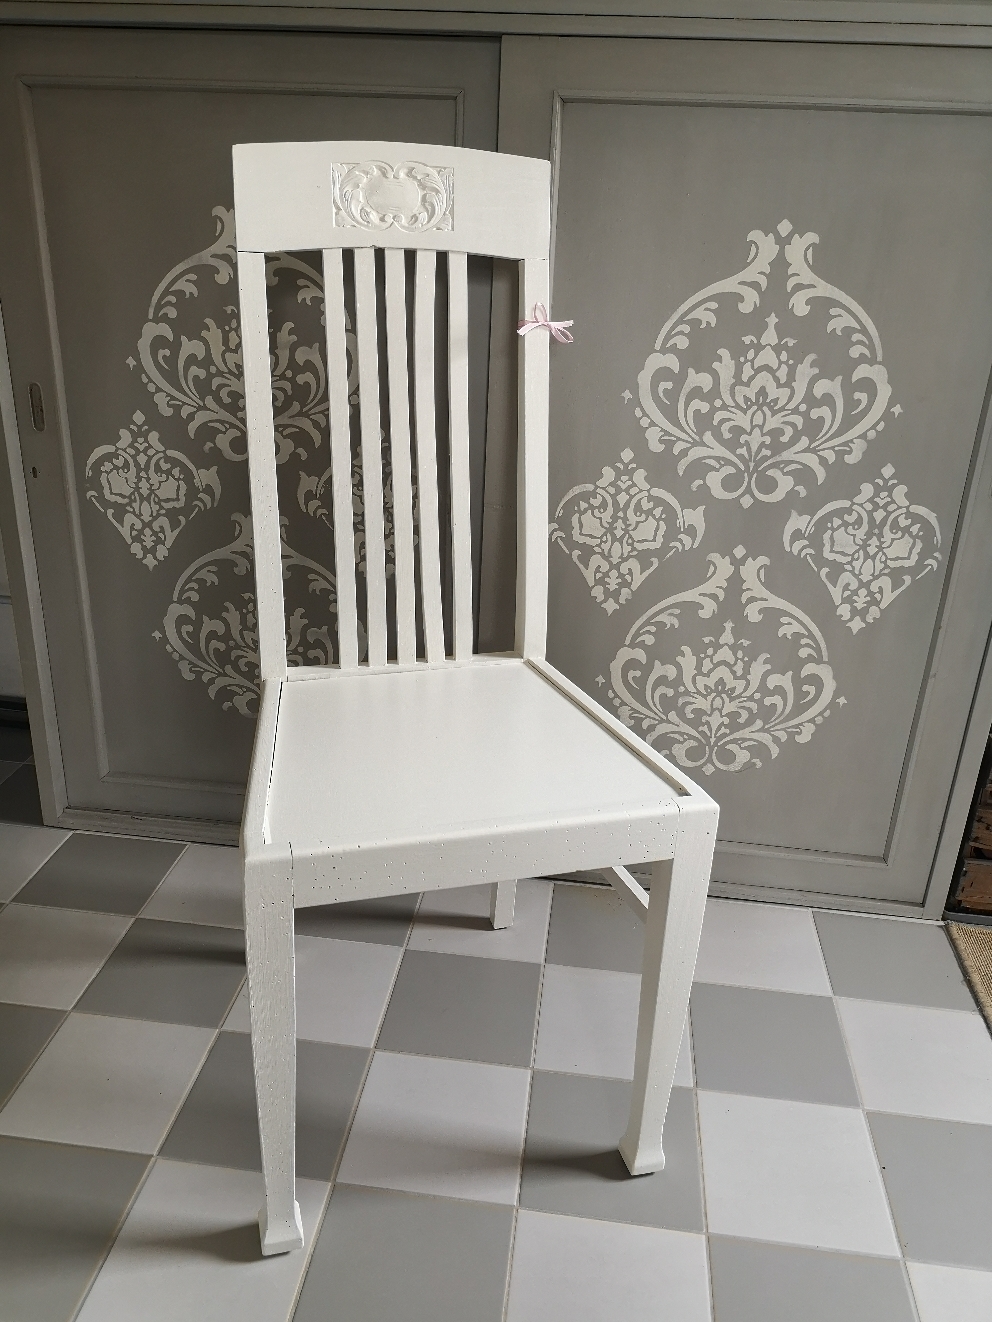 Nachher. Toller, alter Stuhl in neuem Glanz! PtP Farbe in "Cotton White"